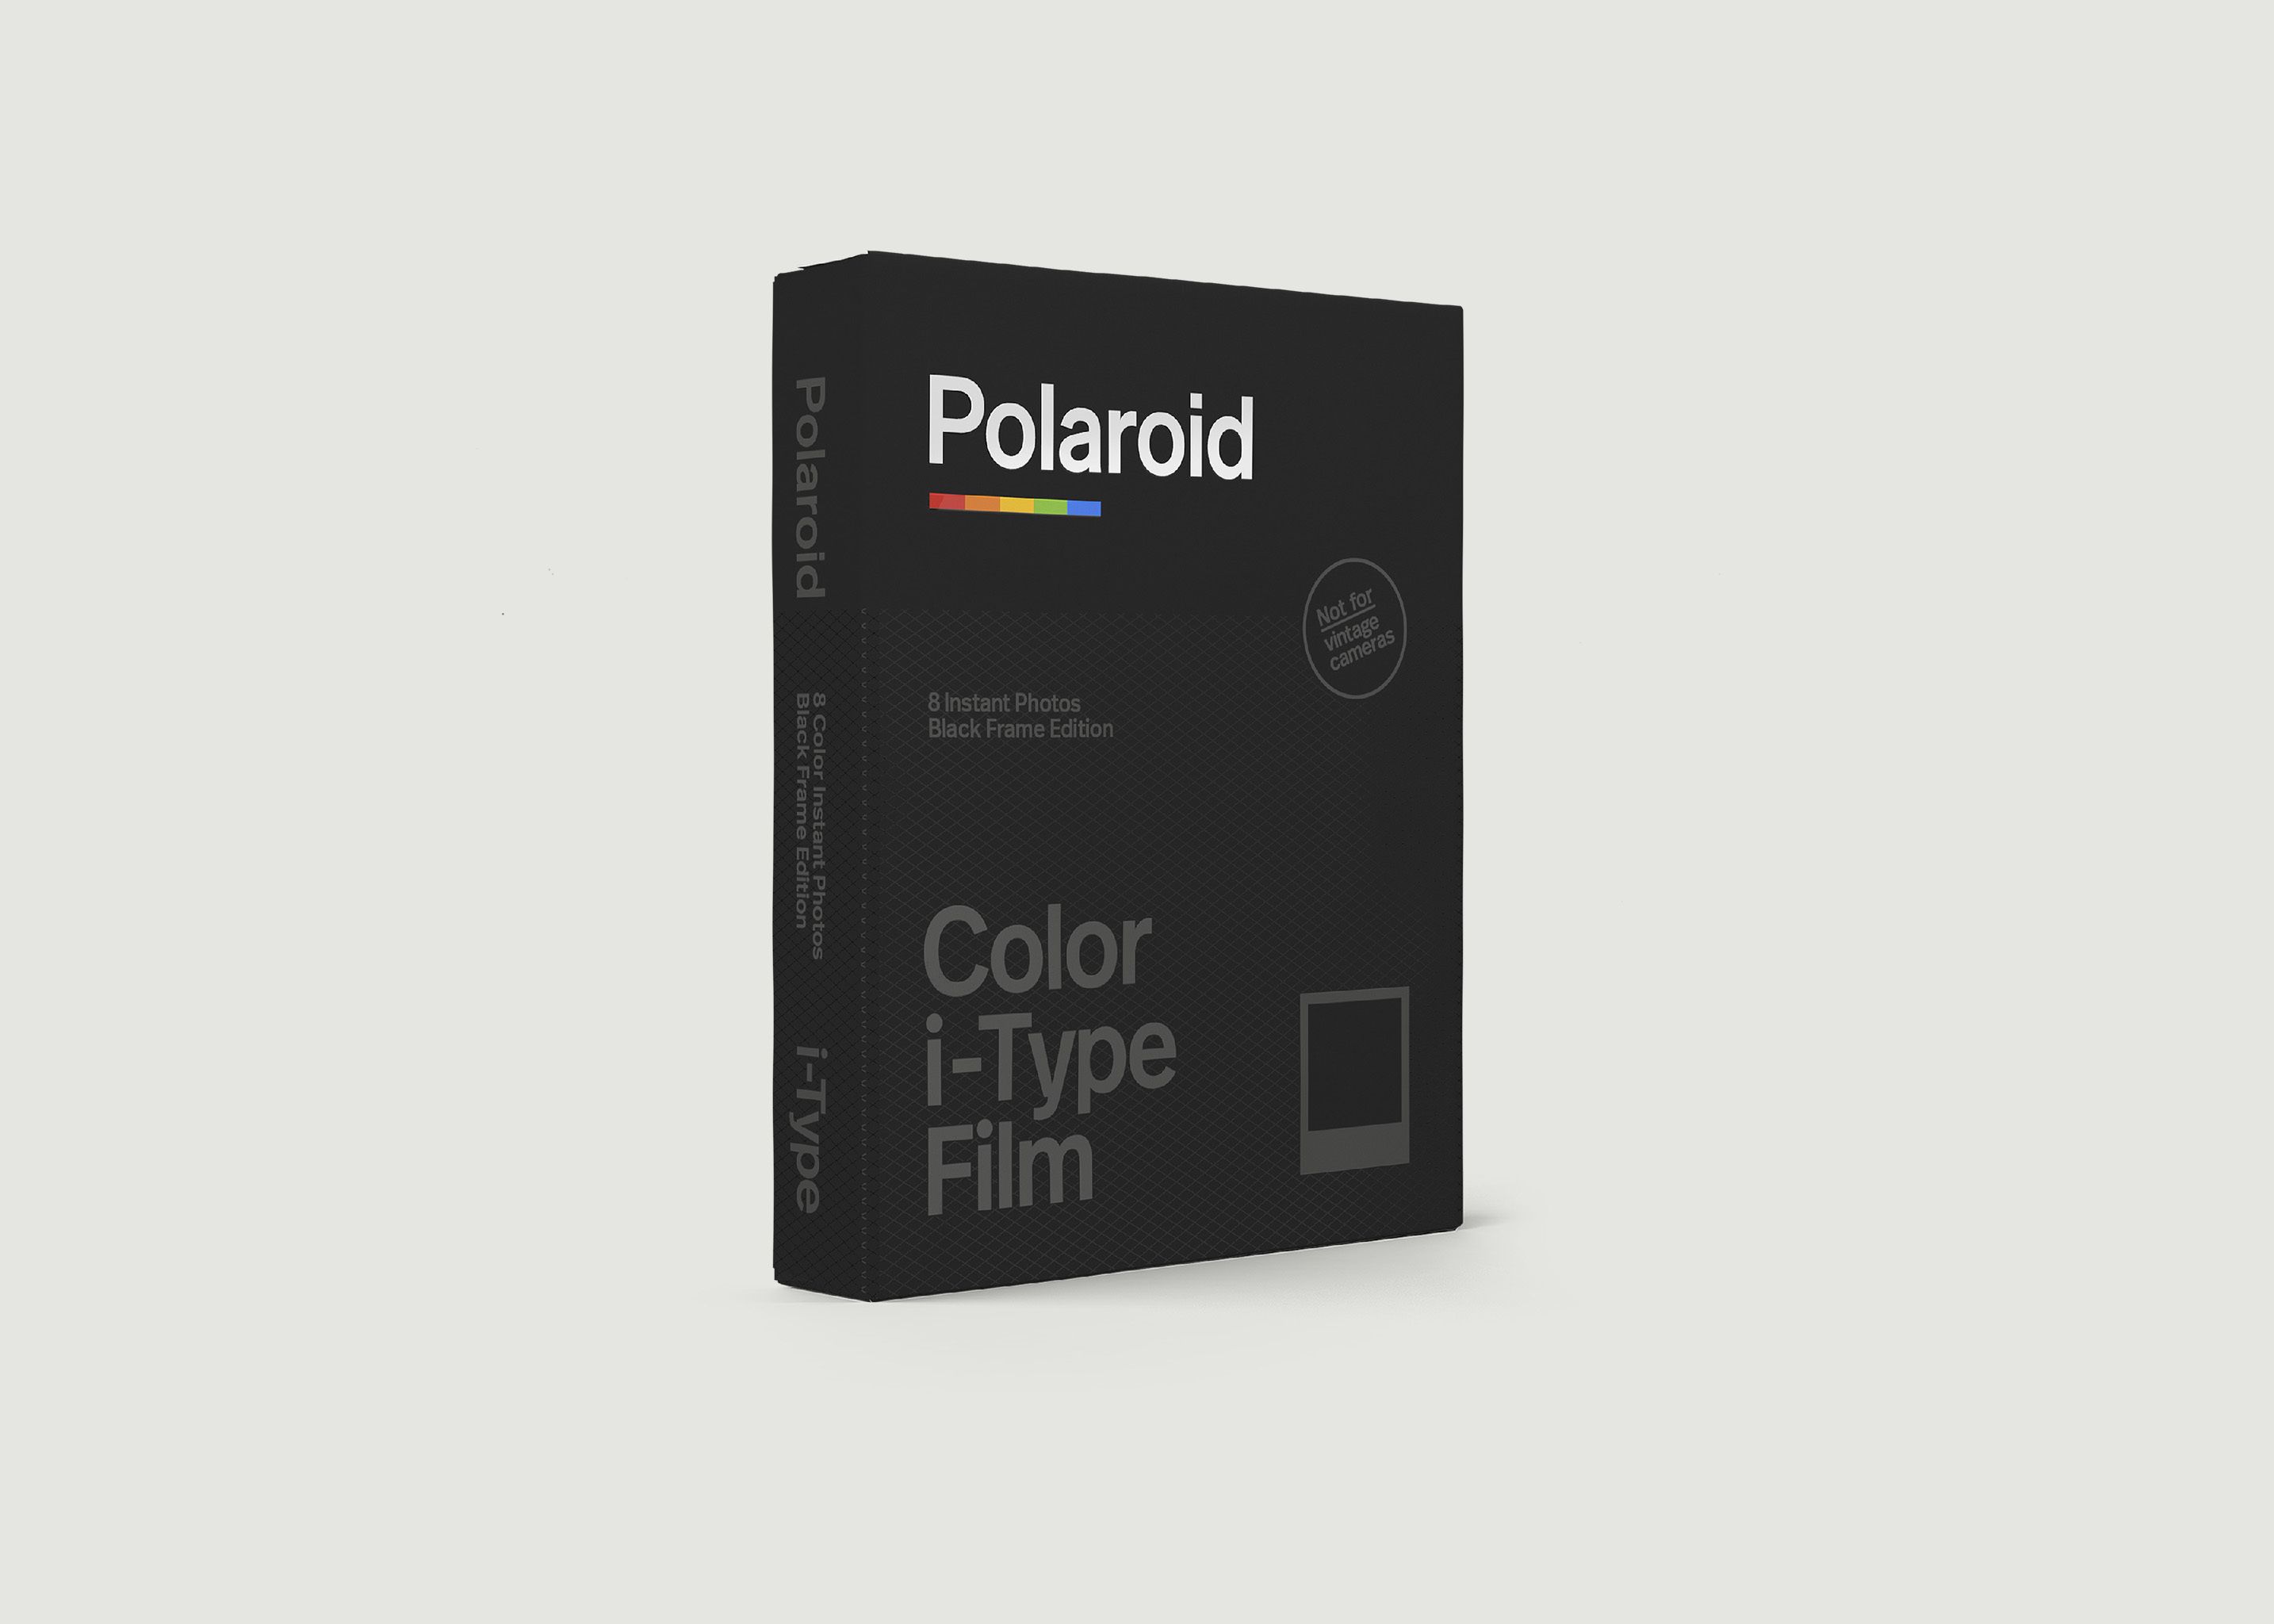 Film Color I Type Black Frame Edition Color - Polaroid Originals